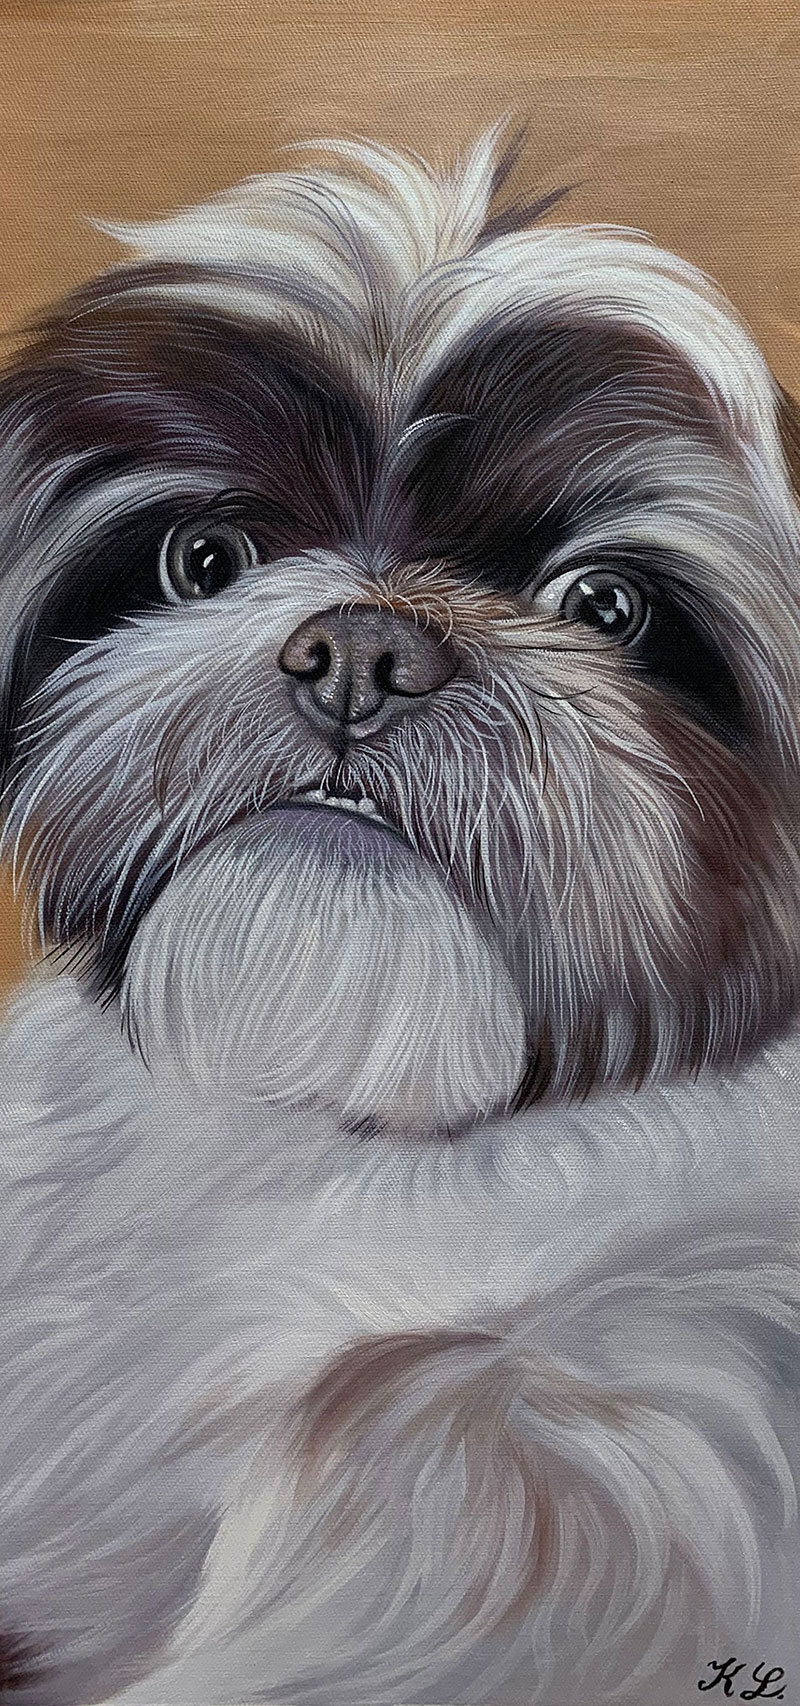 Custom handmade close up oil painting of a dog